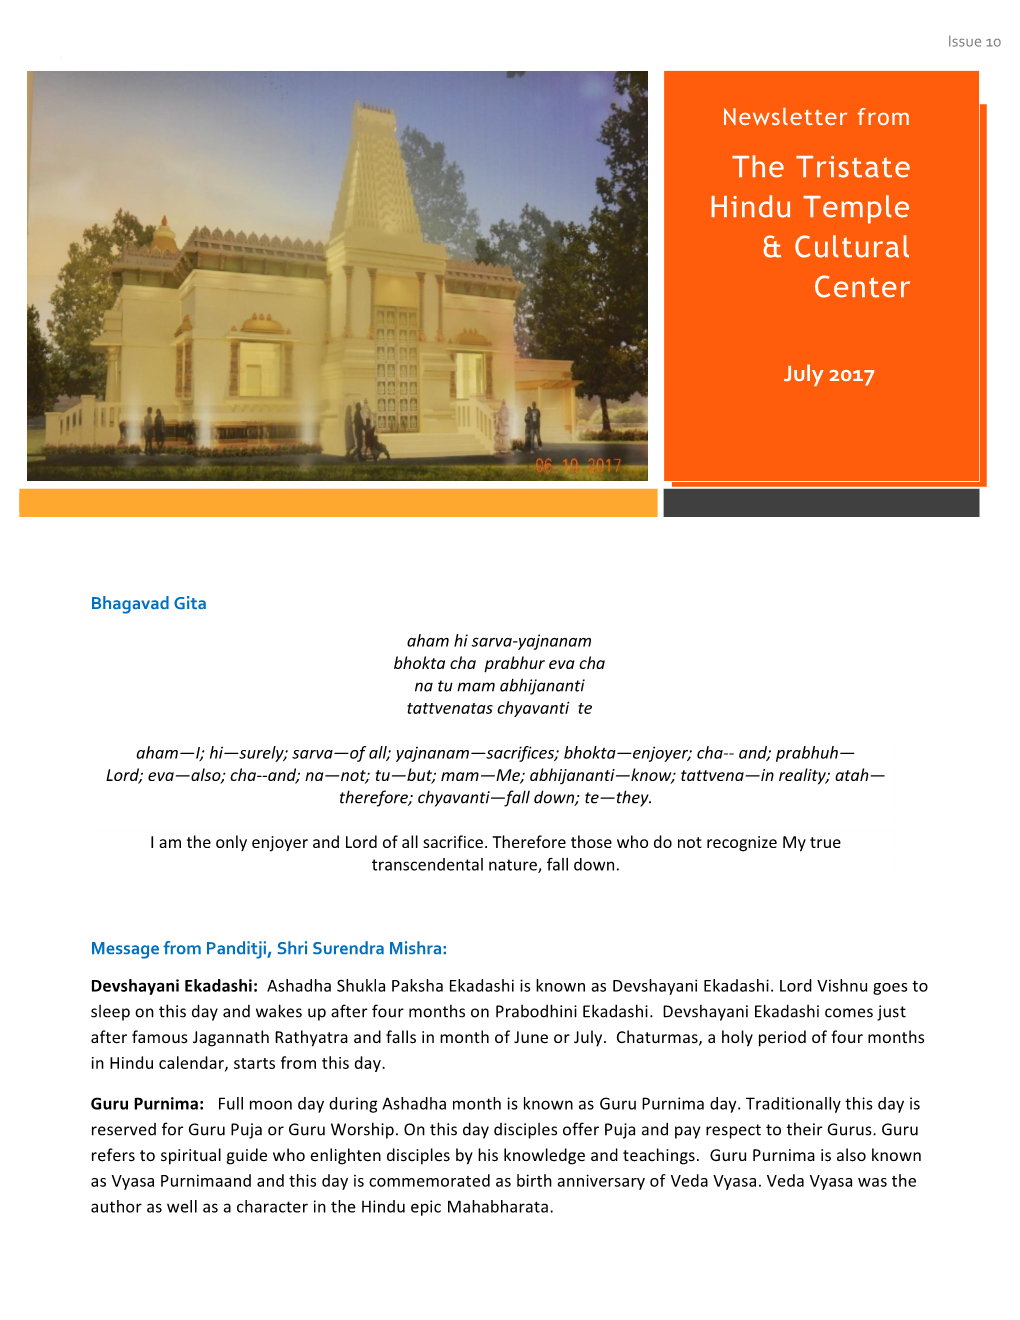 The Tristate Hindu Temple & Cultural Center